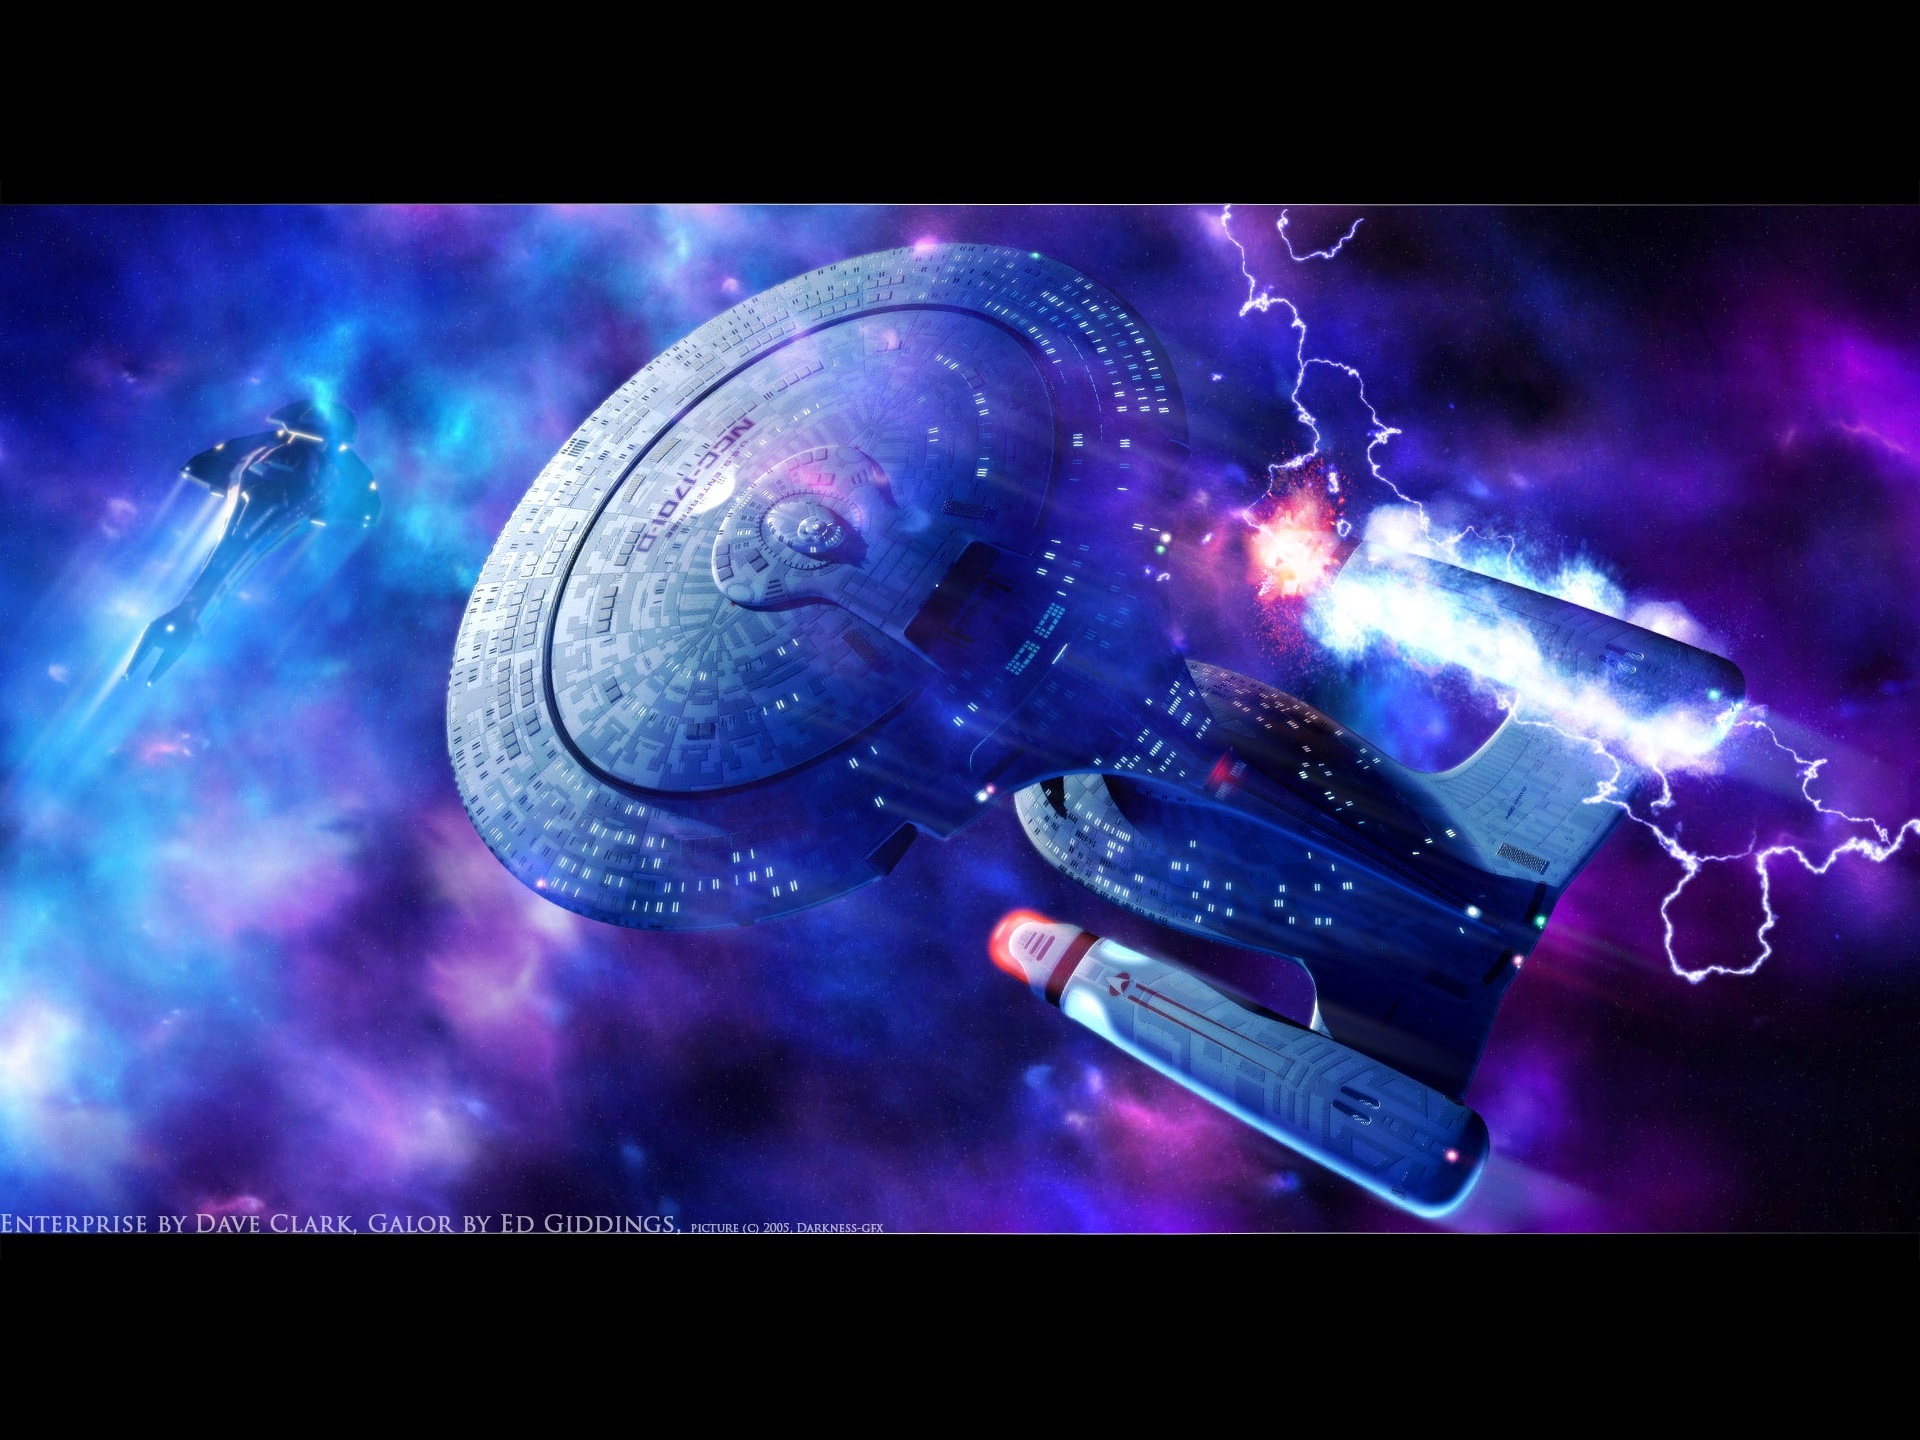 HD Wallpaper Star Trek Uss Enterprise X Kb Jpeg